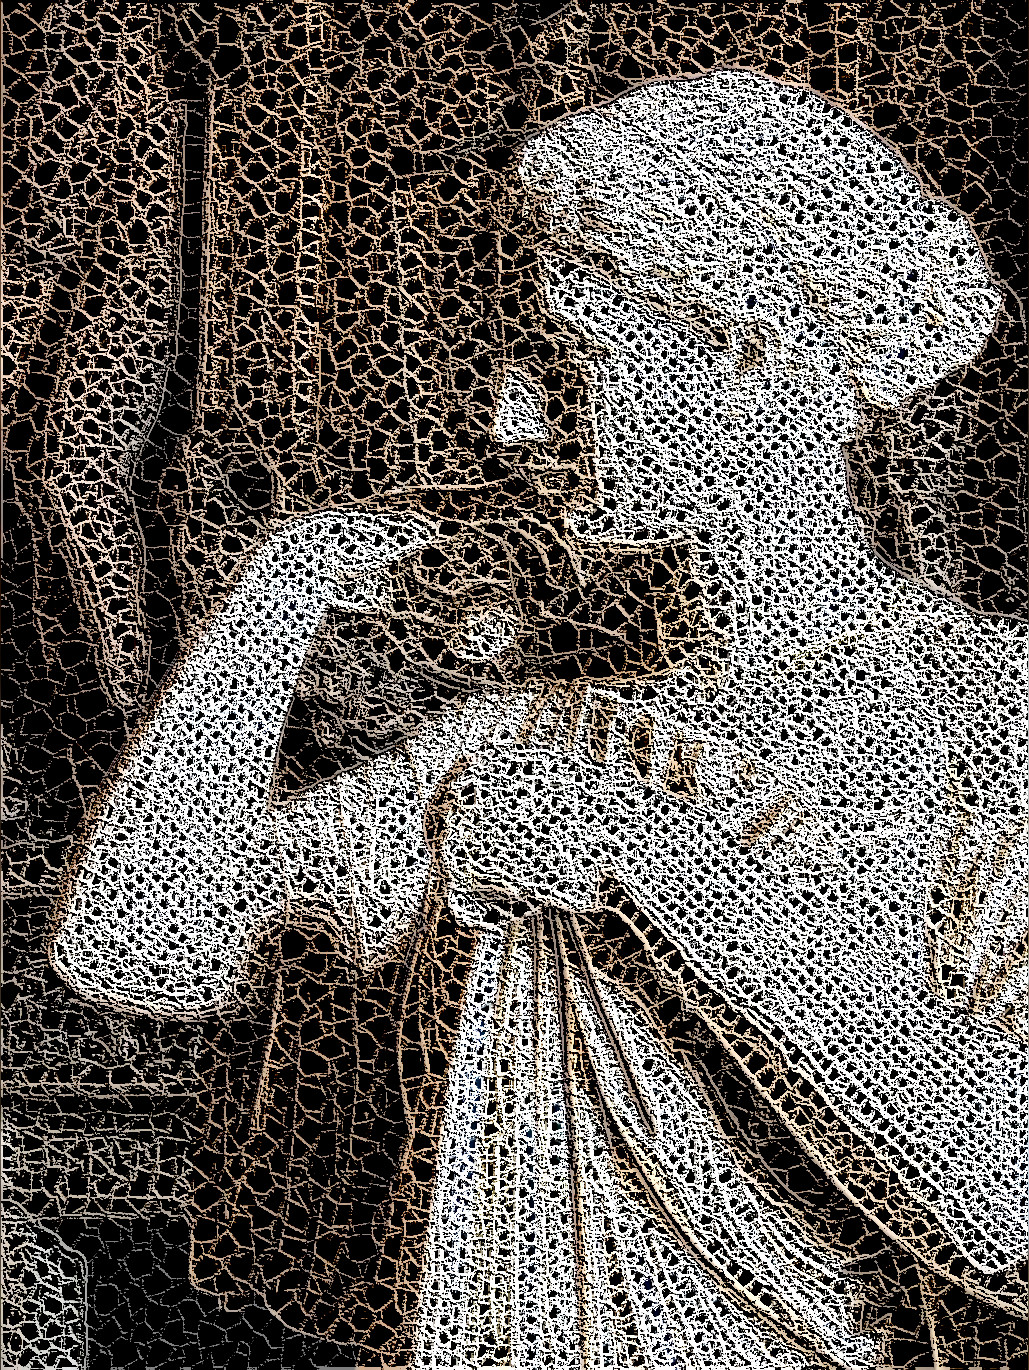 769px-artemis_gabii_louvre_ma529_n2, as a Crazy Crochet (colour areas =7) (combo crochet).jpg